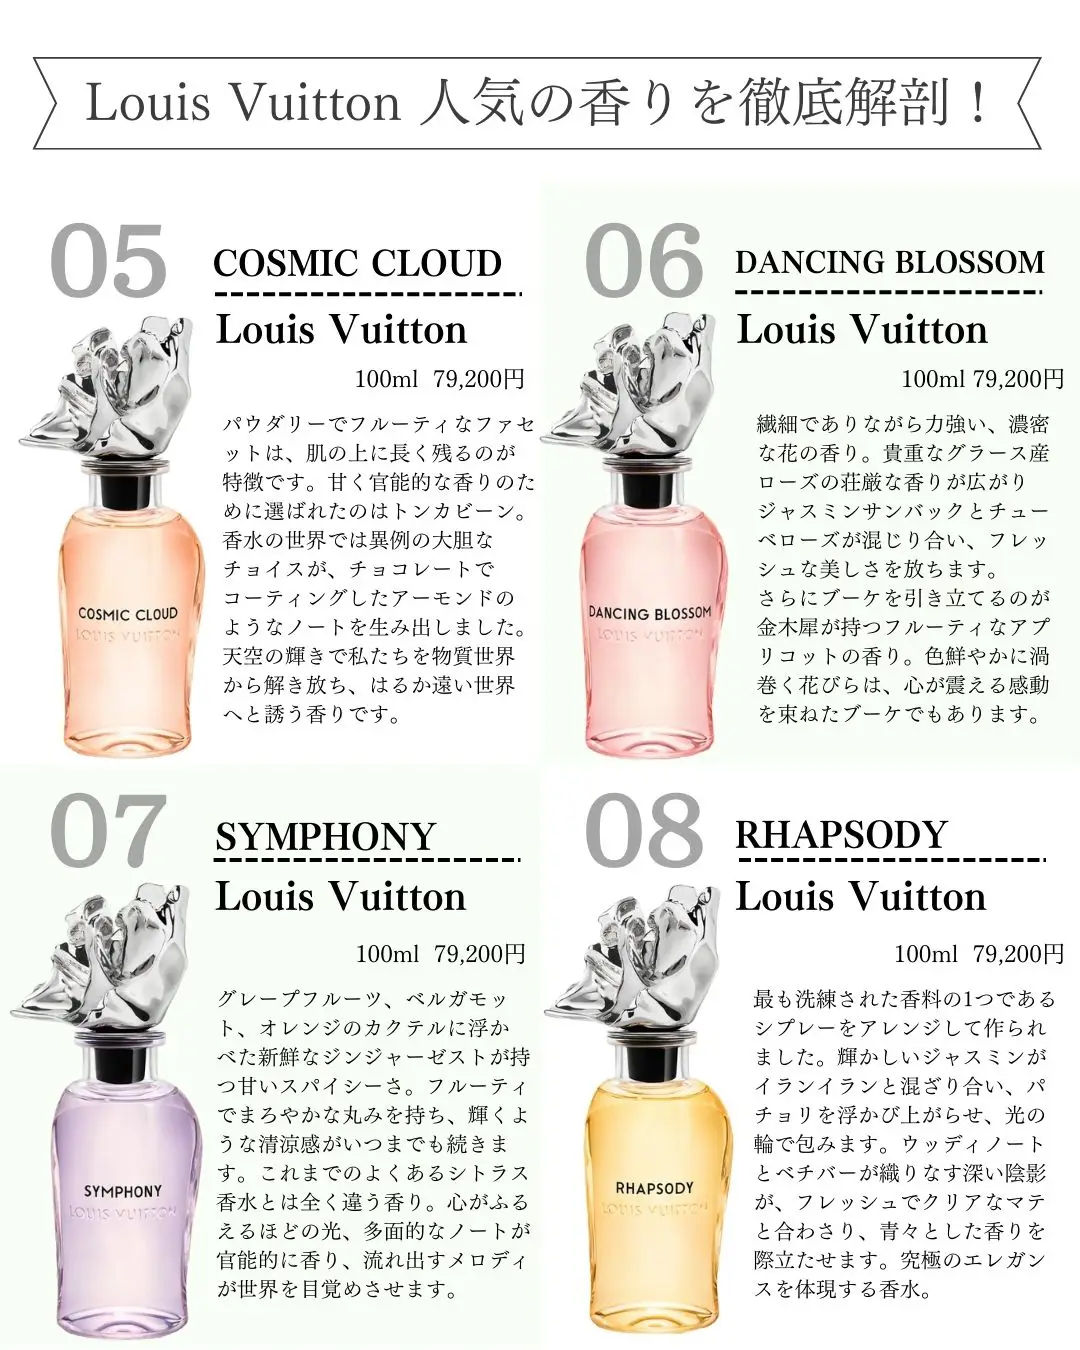 Louis Vuitton Dancing blossom dupe